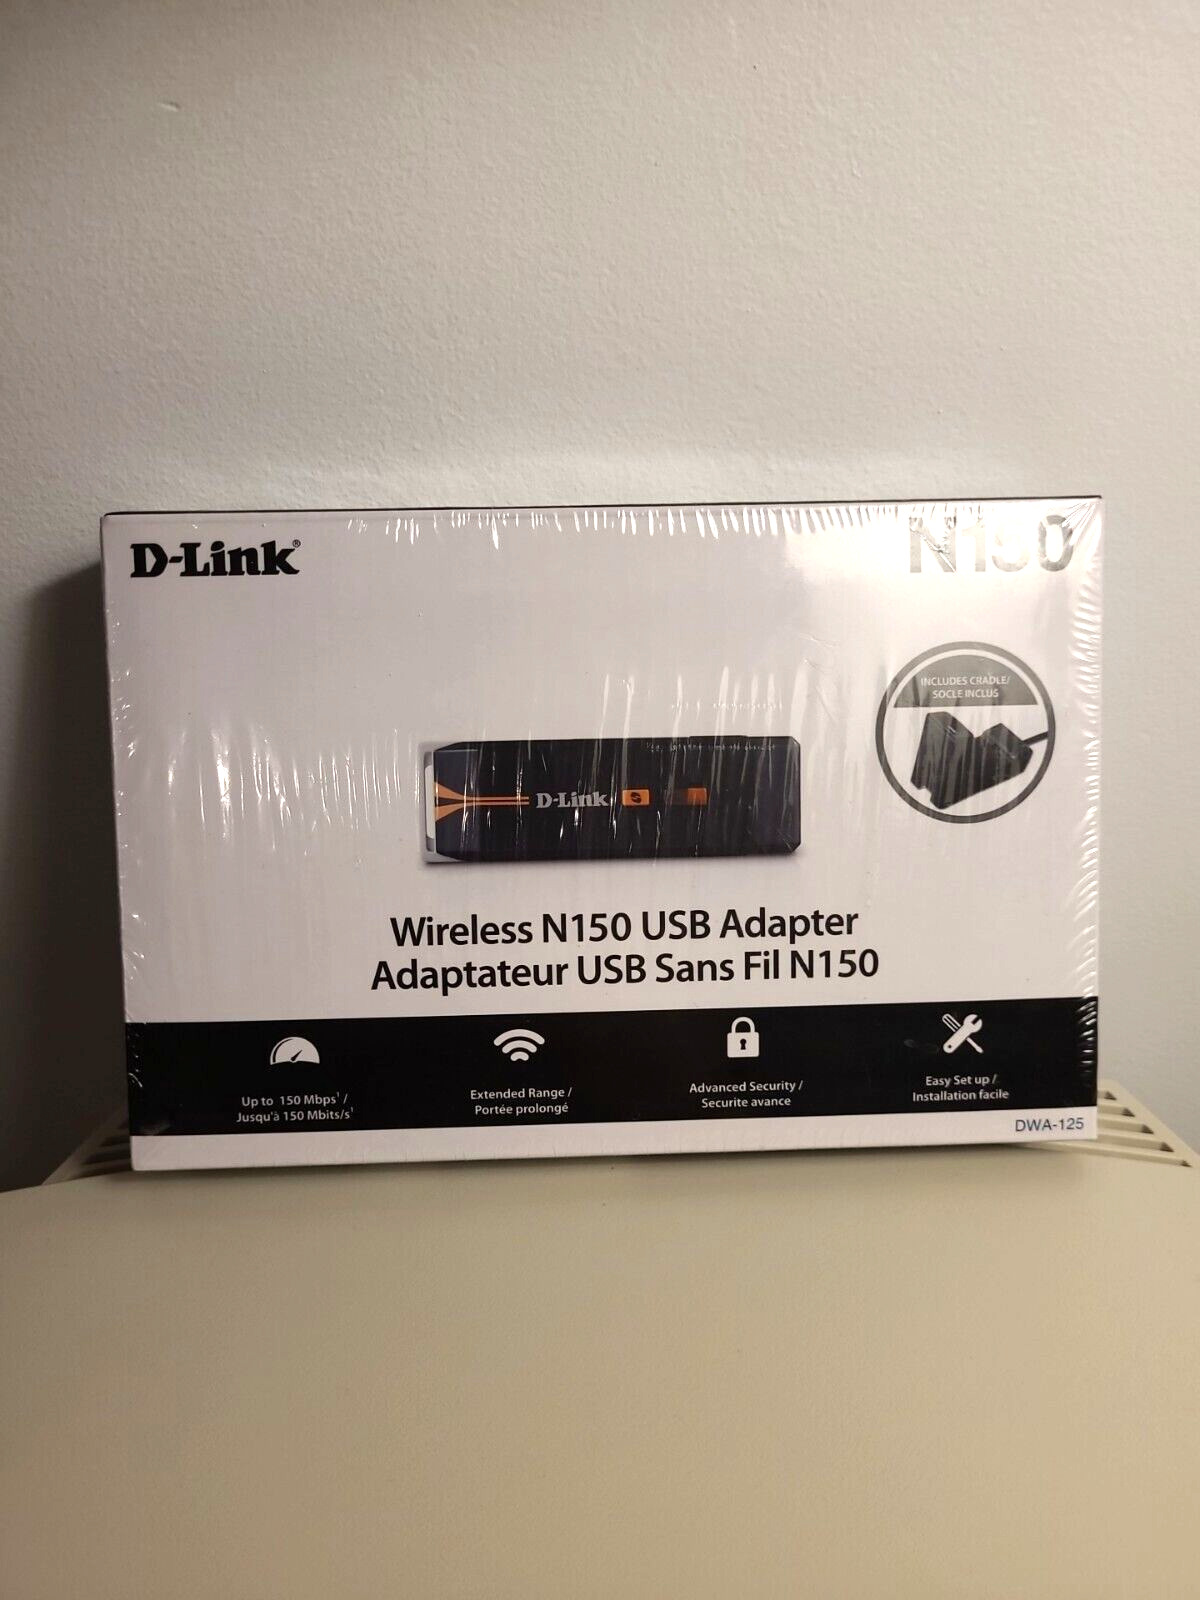 D-link DWA 125 Wireless N 150 USB Adapter DWA-125 New in Box